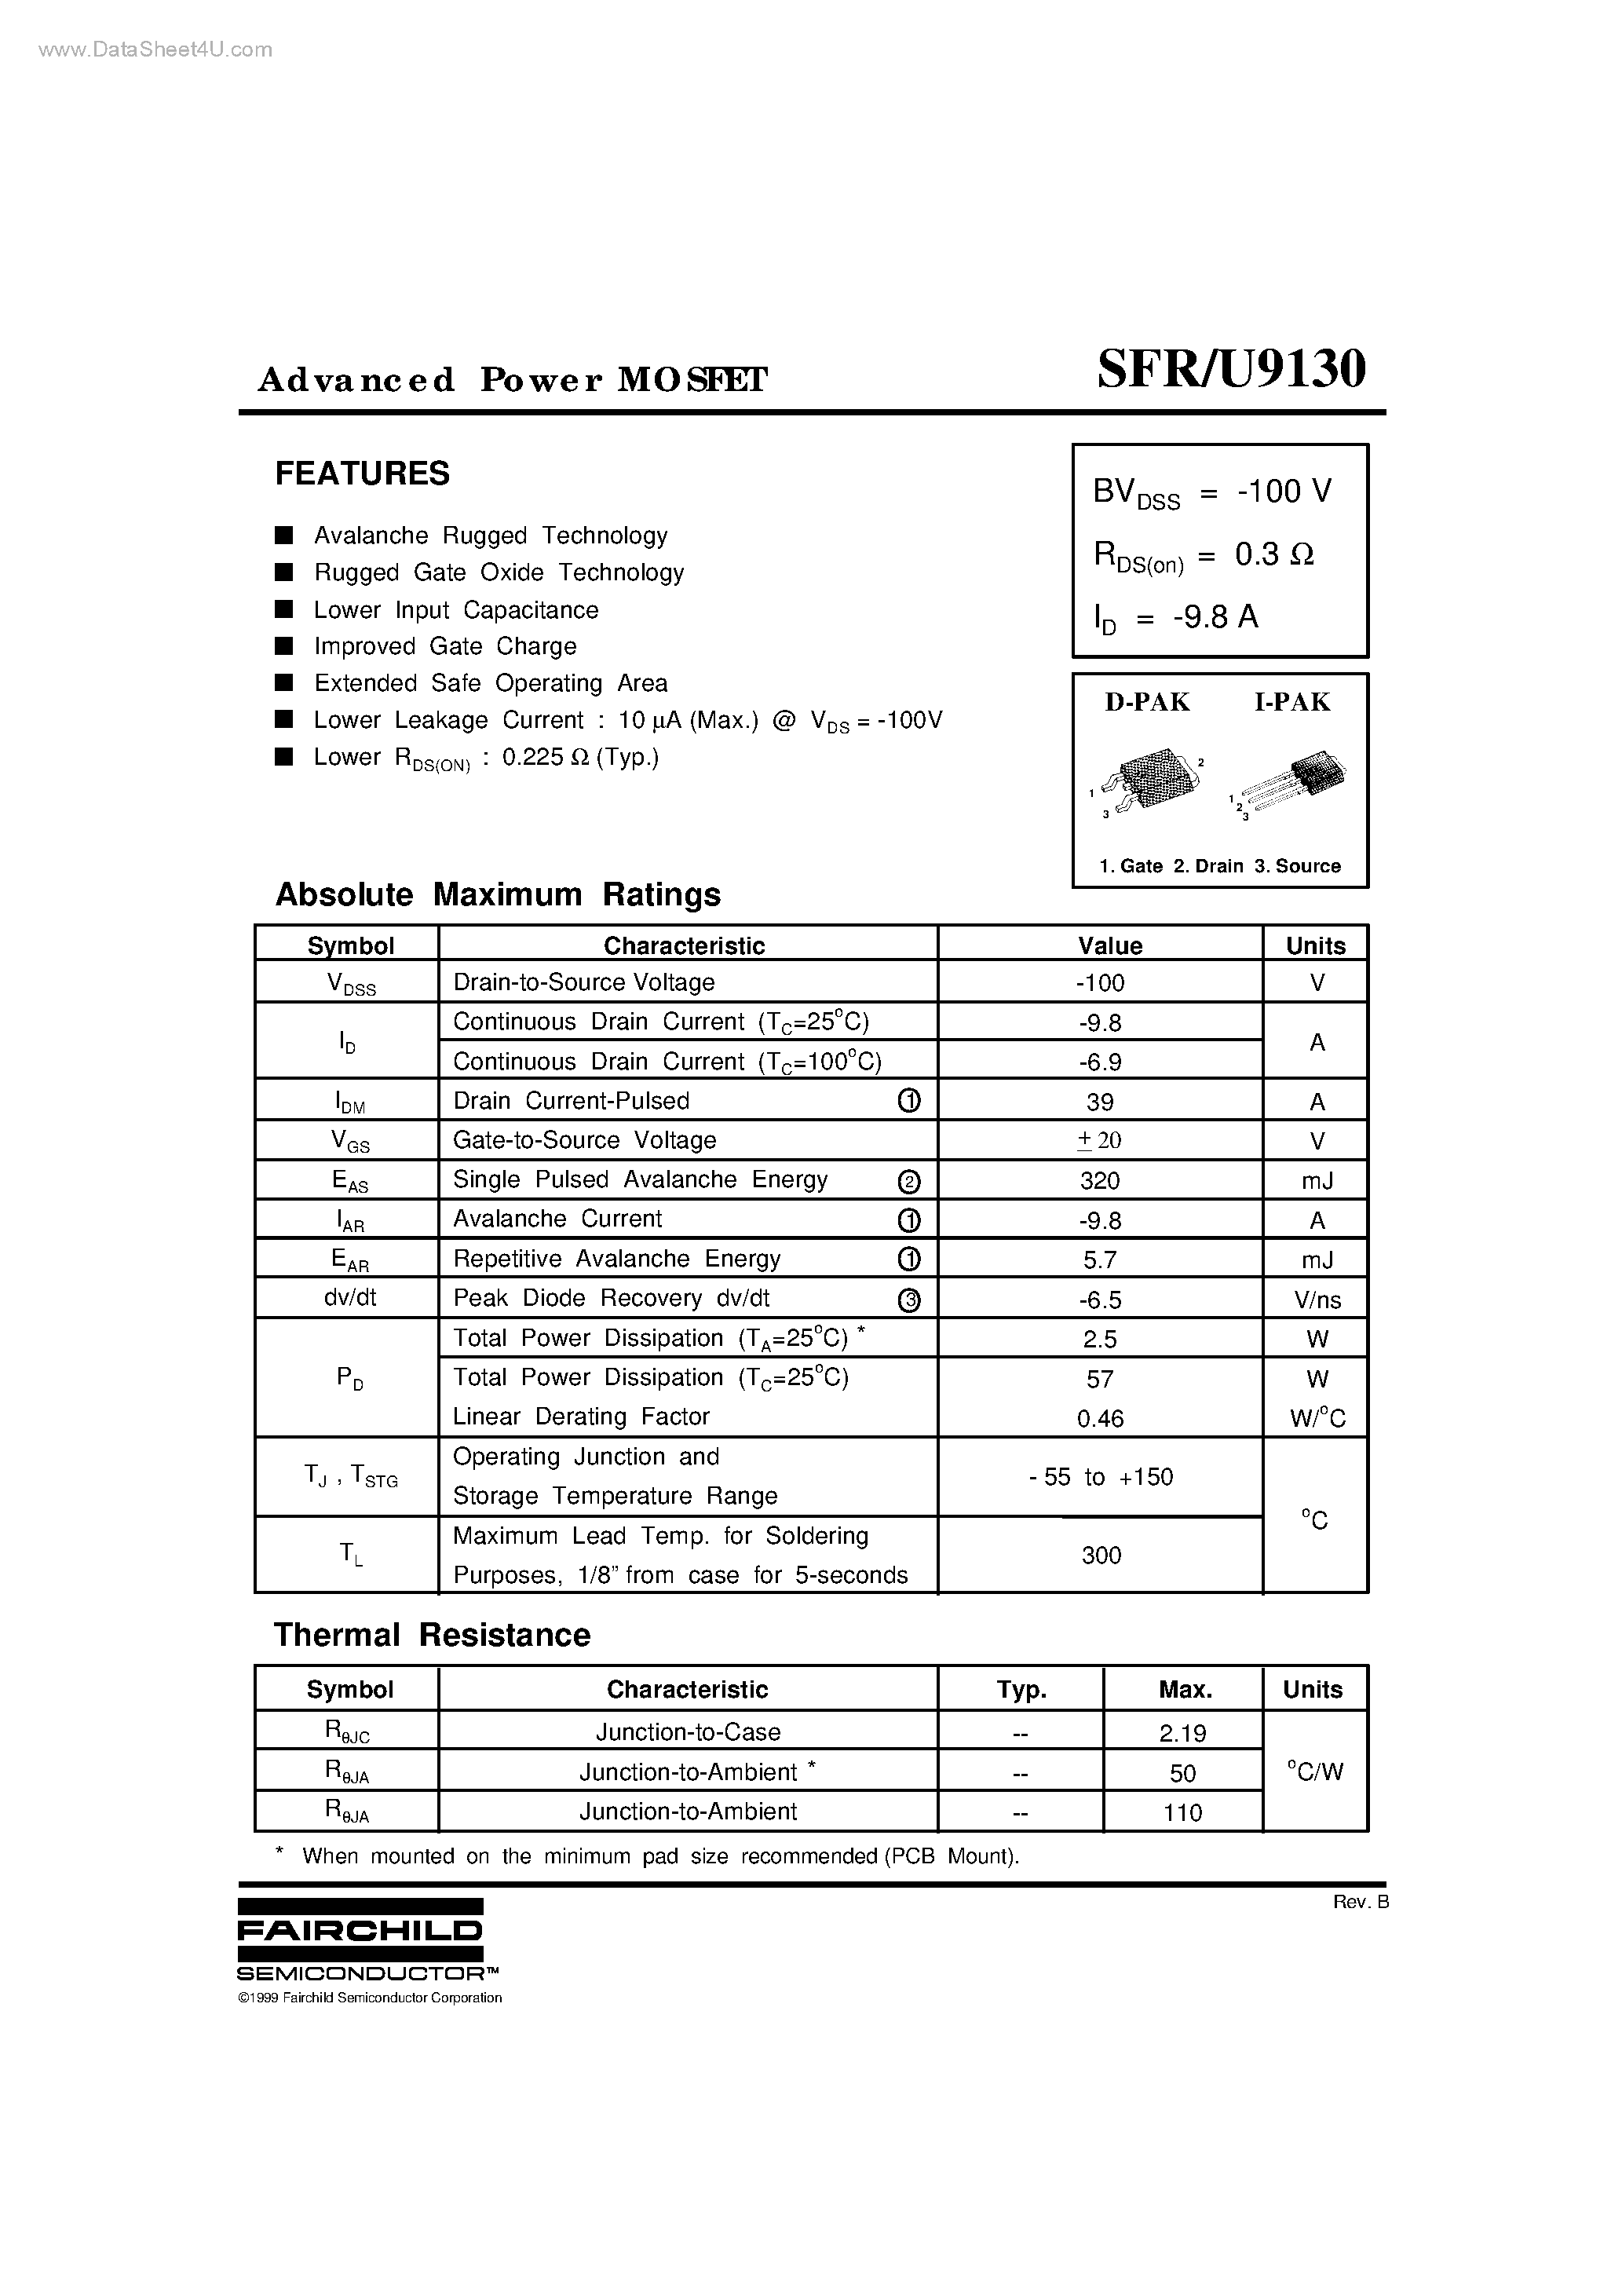 Datasheet SFR9130 - Advanced Power MOSFET page 1